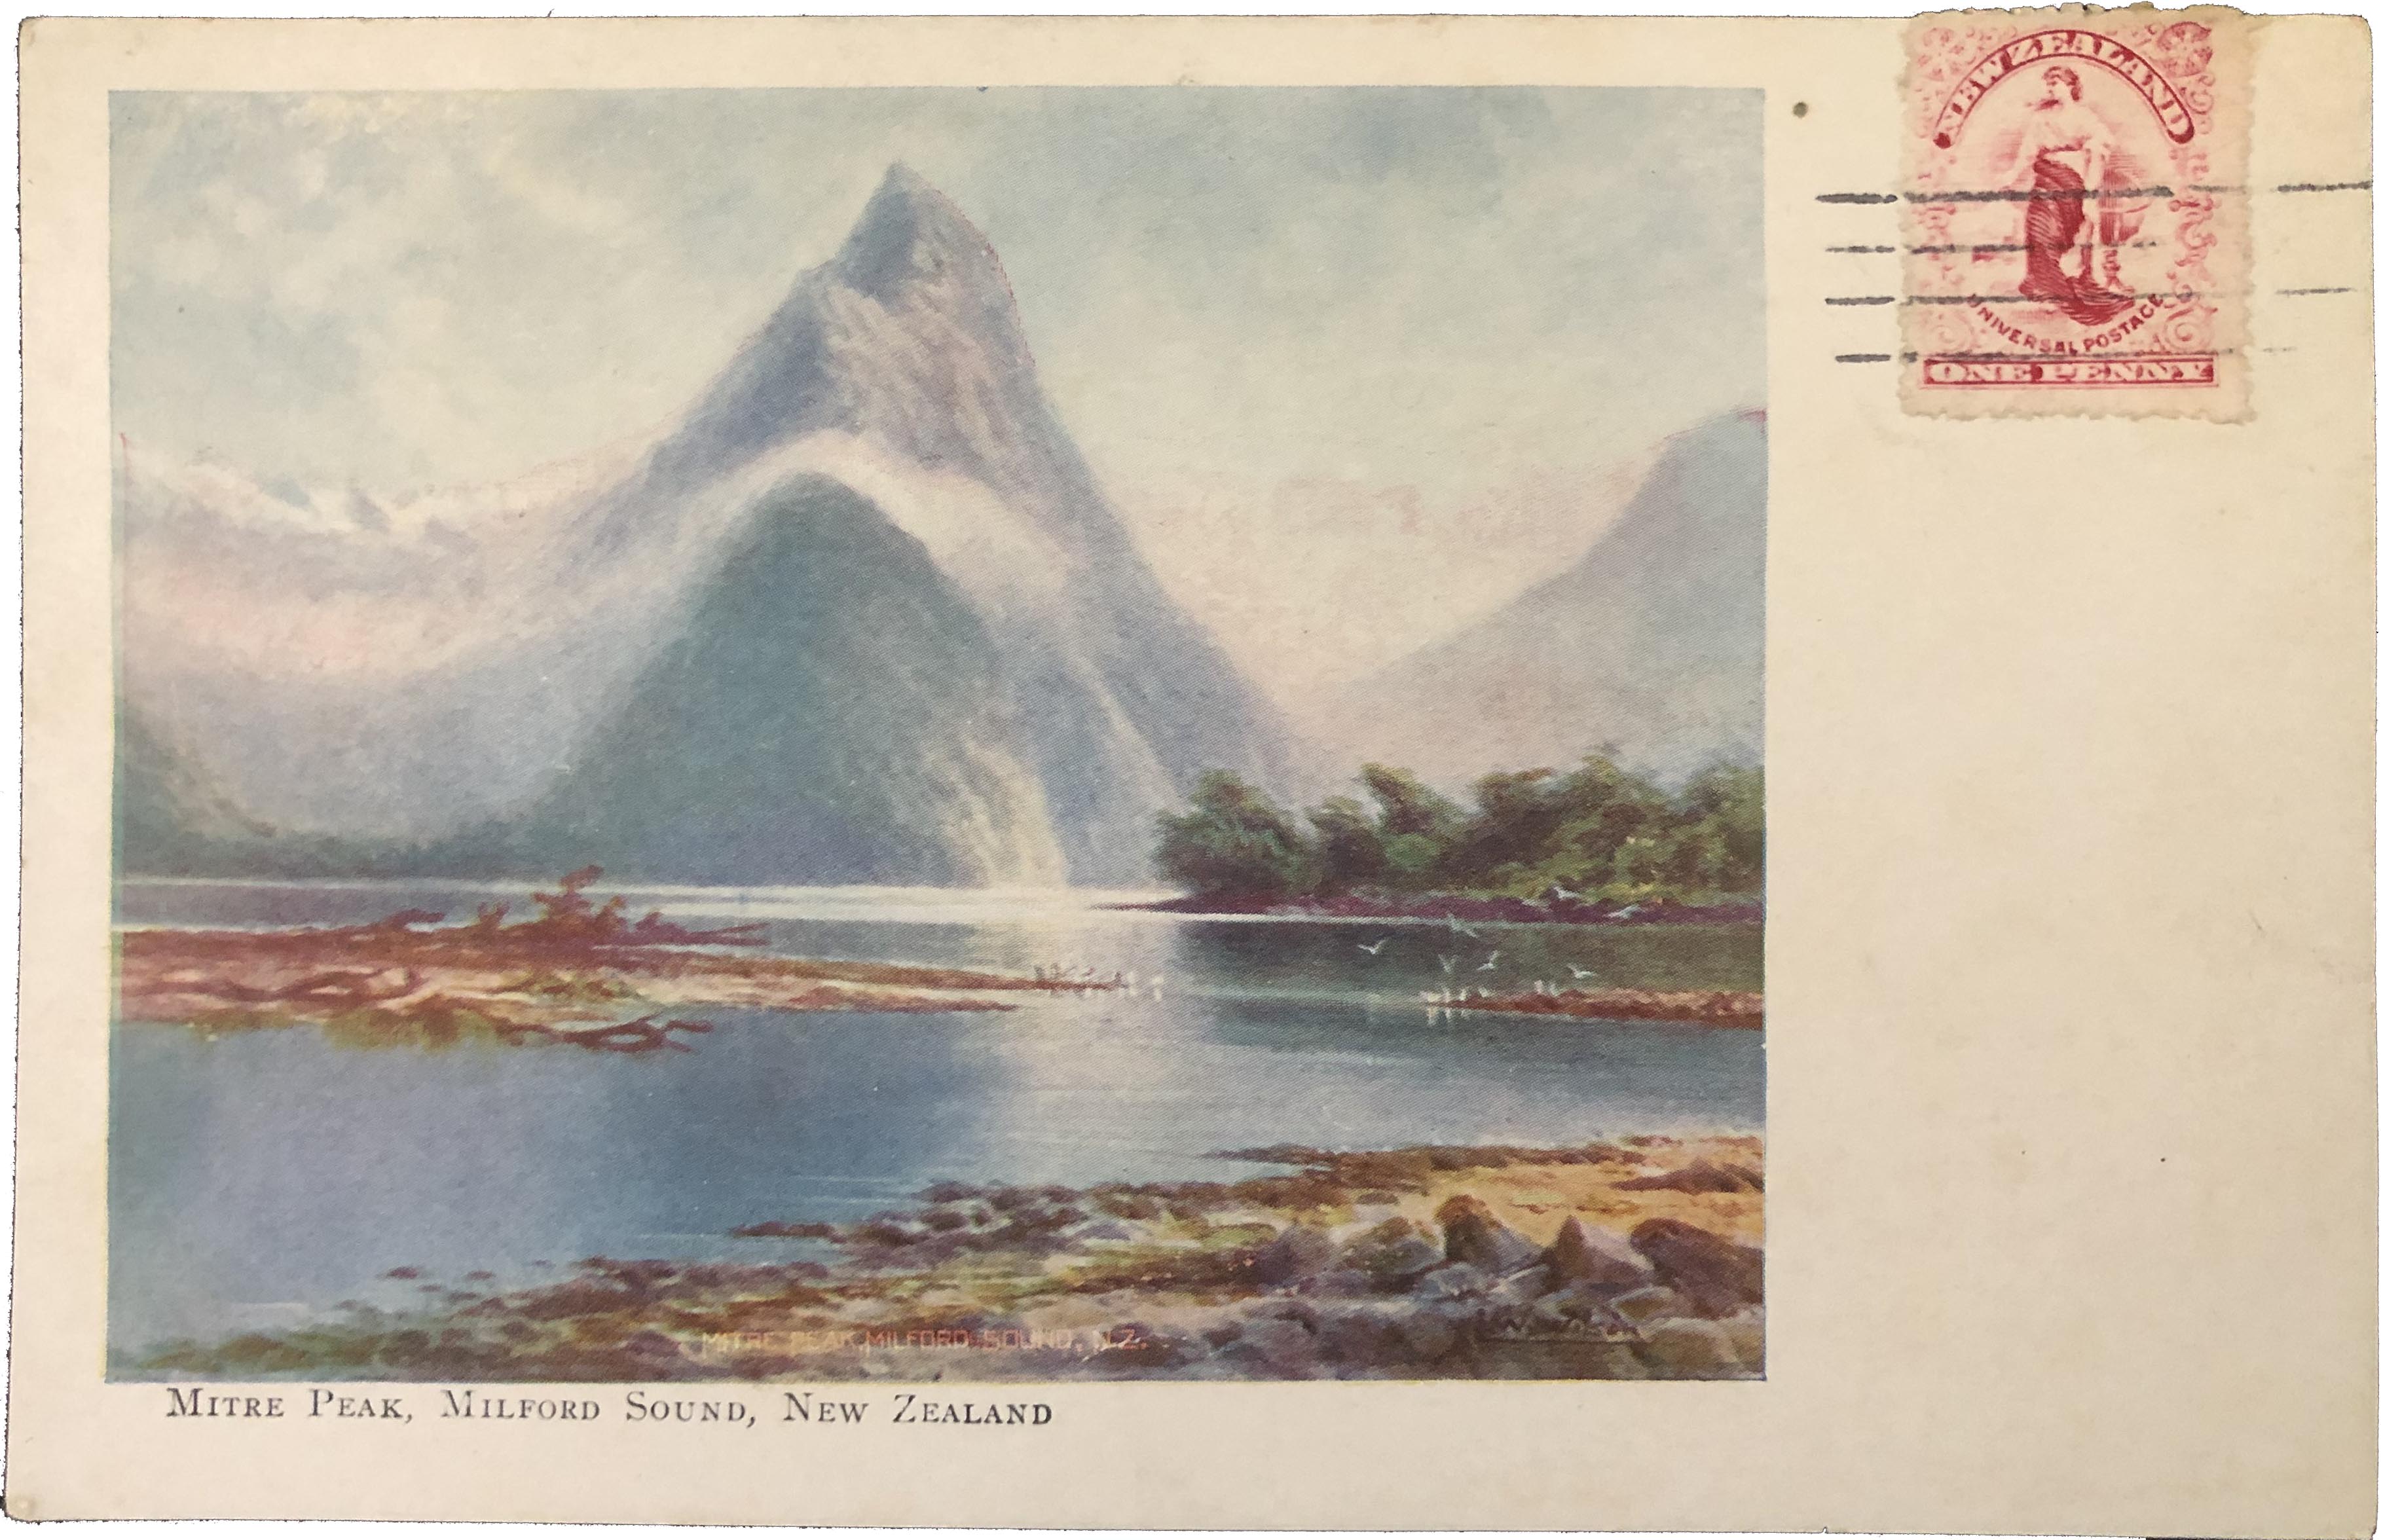 (front of postcard) Wilson postcard, Mitre Peak, Milford Sound, New Zealand